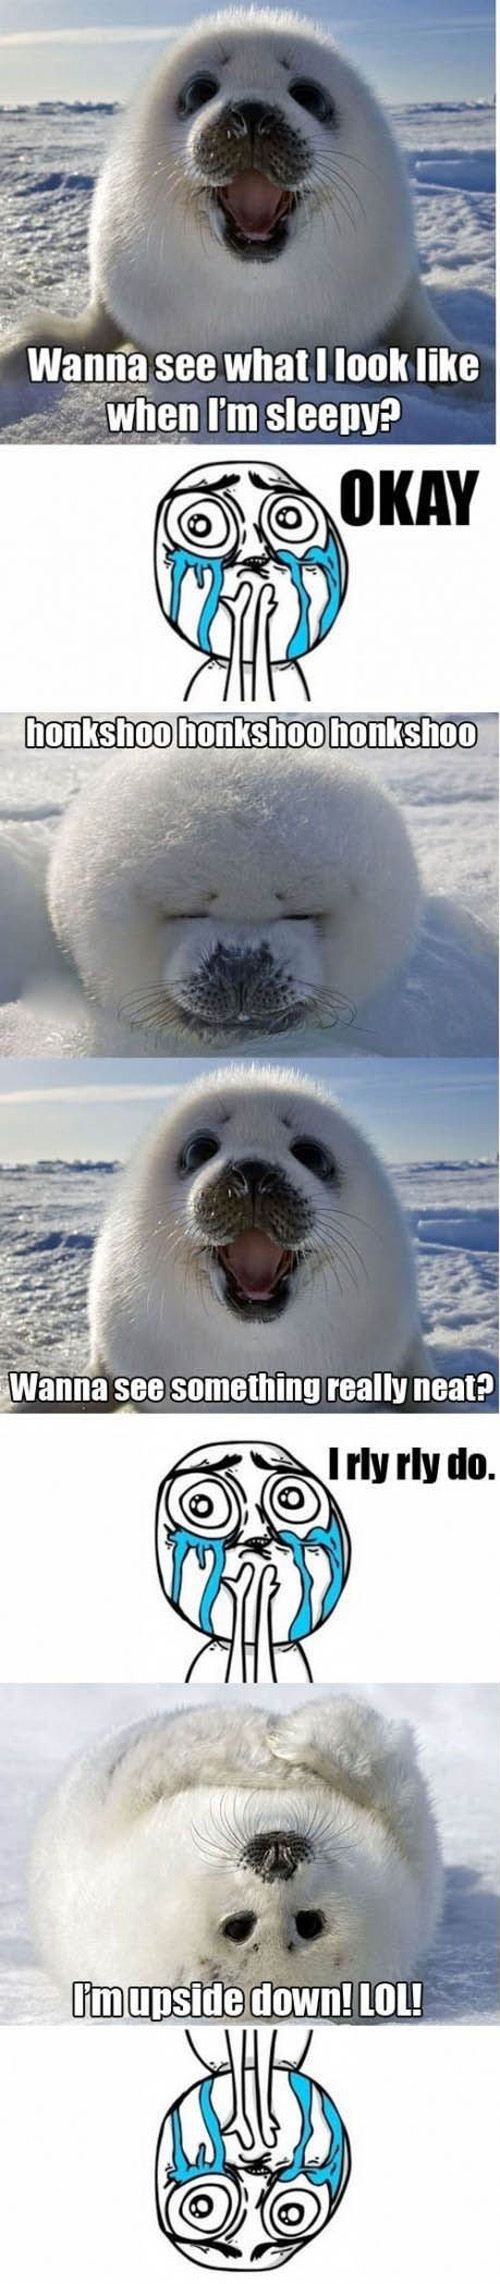 funny pinterest post - white seal cub